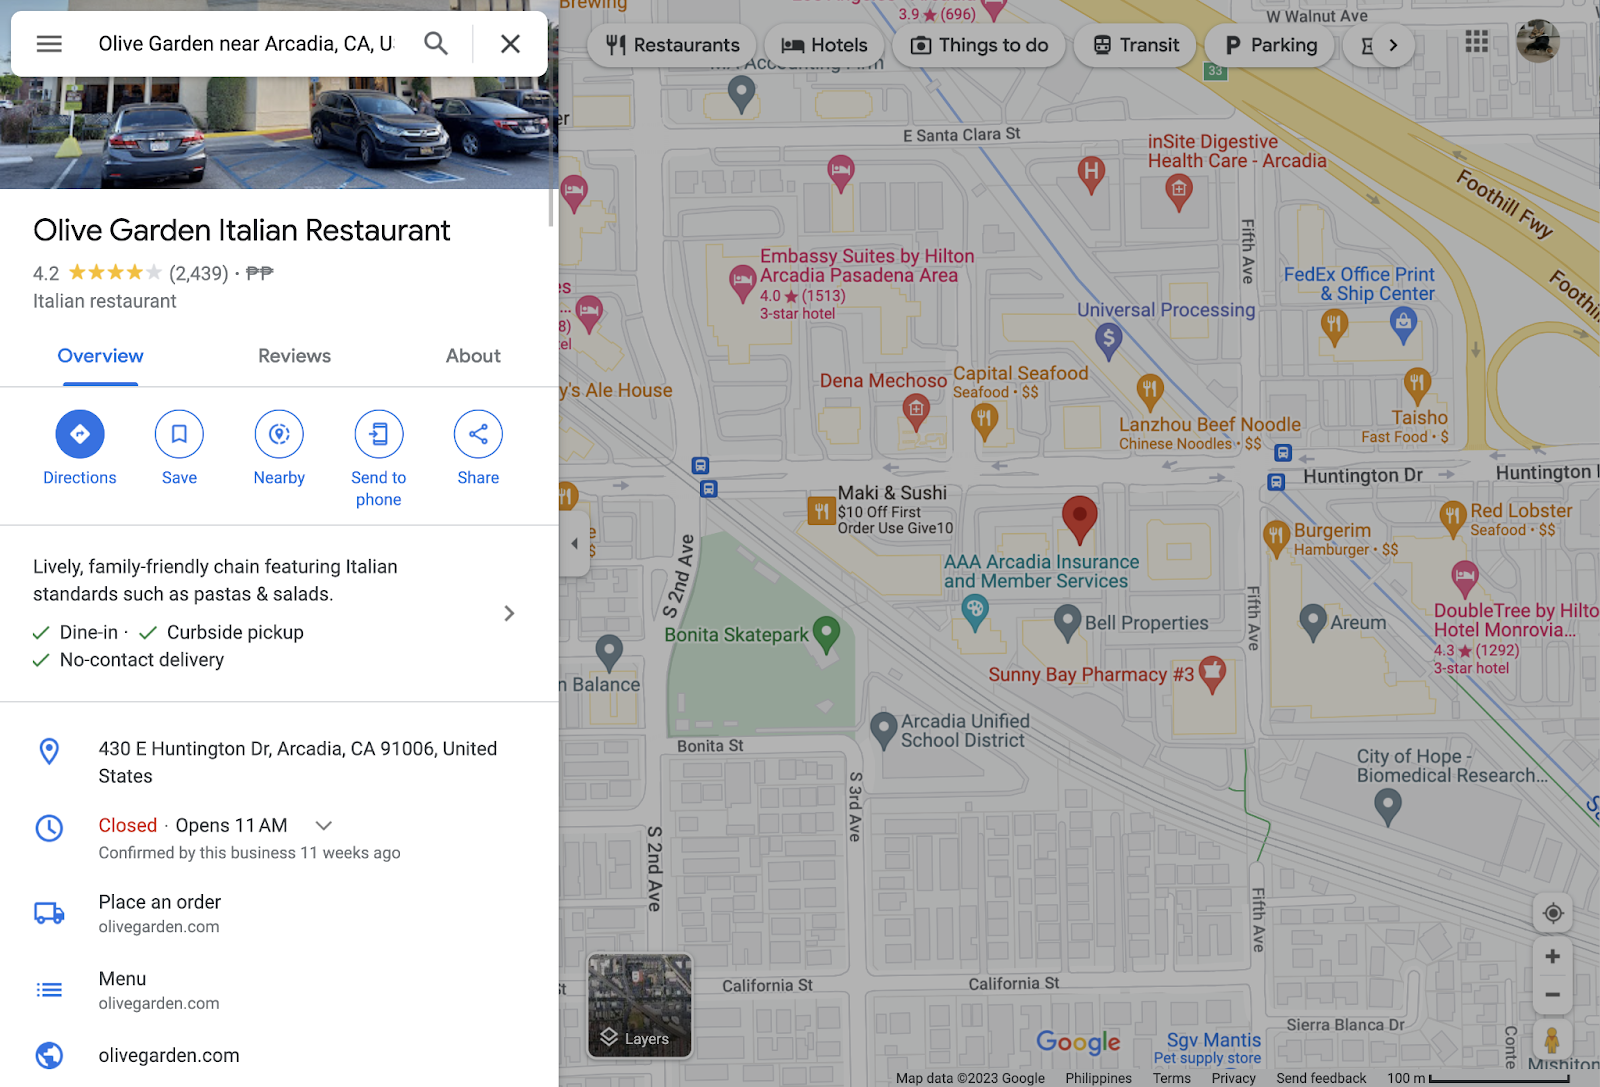 Olive Garden’s on Google Maps